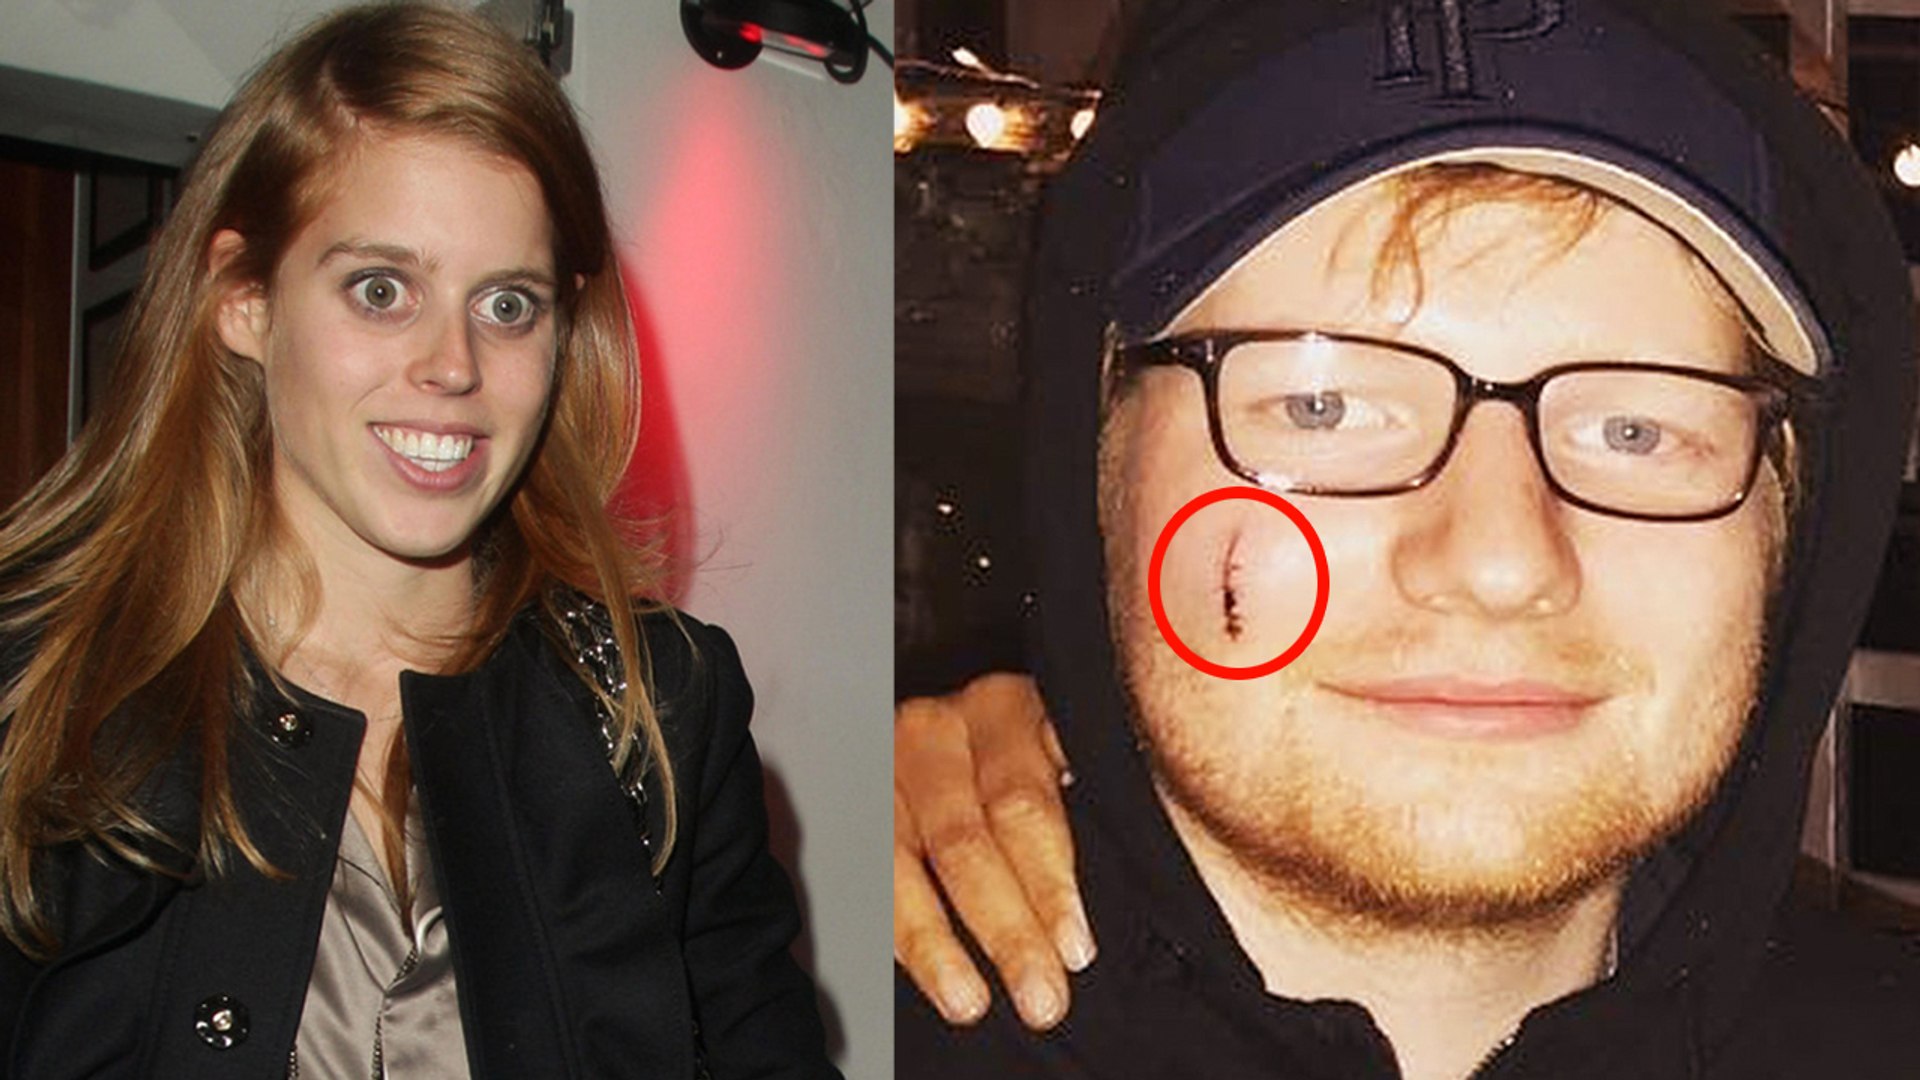 Ed Sheeran's Face Sliced Accidentally by A British Royal at a Party